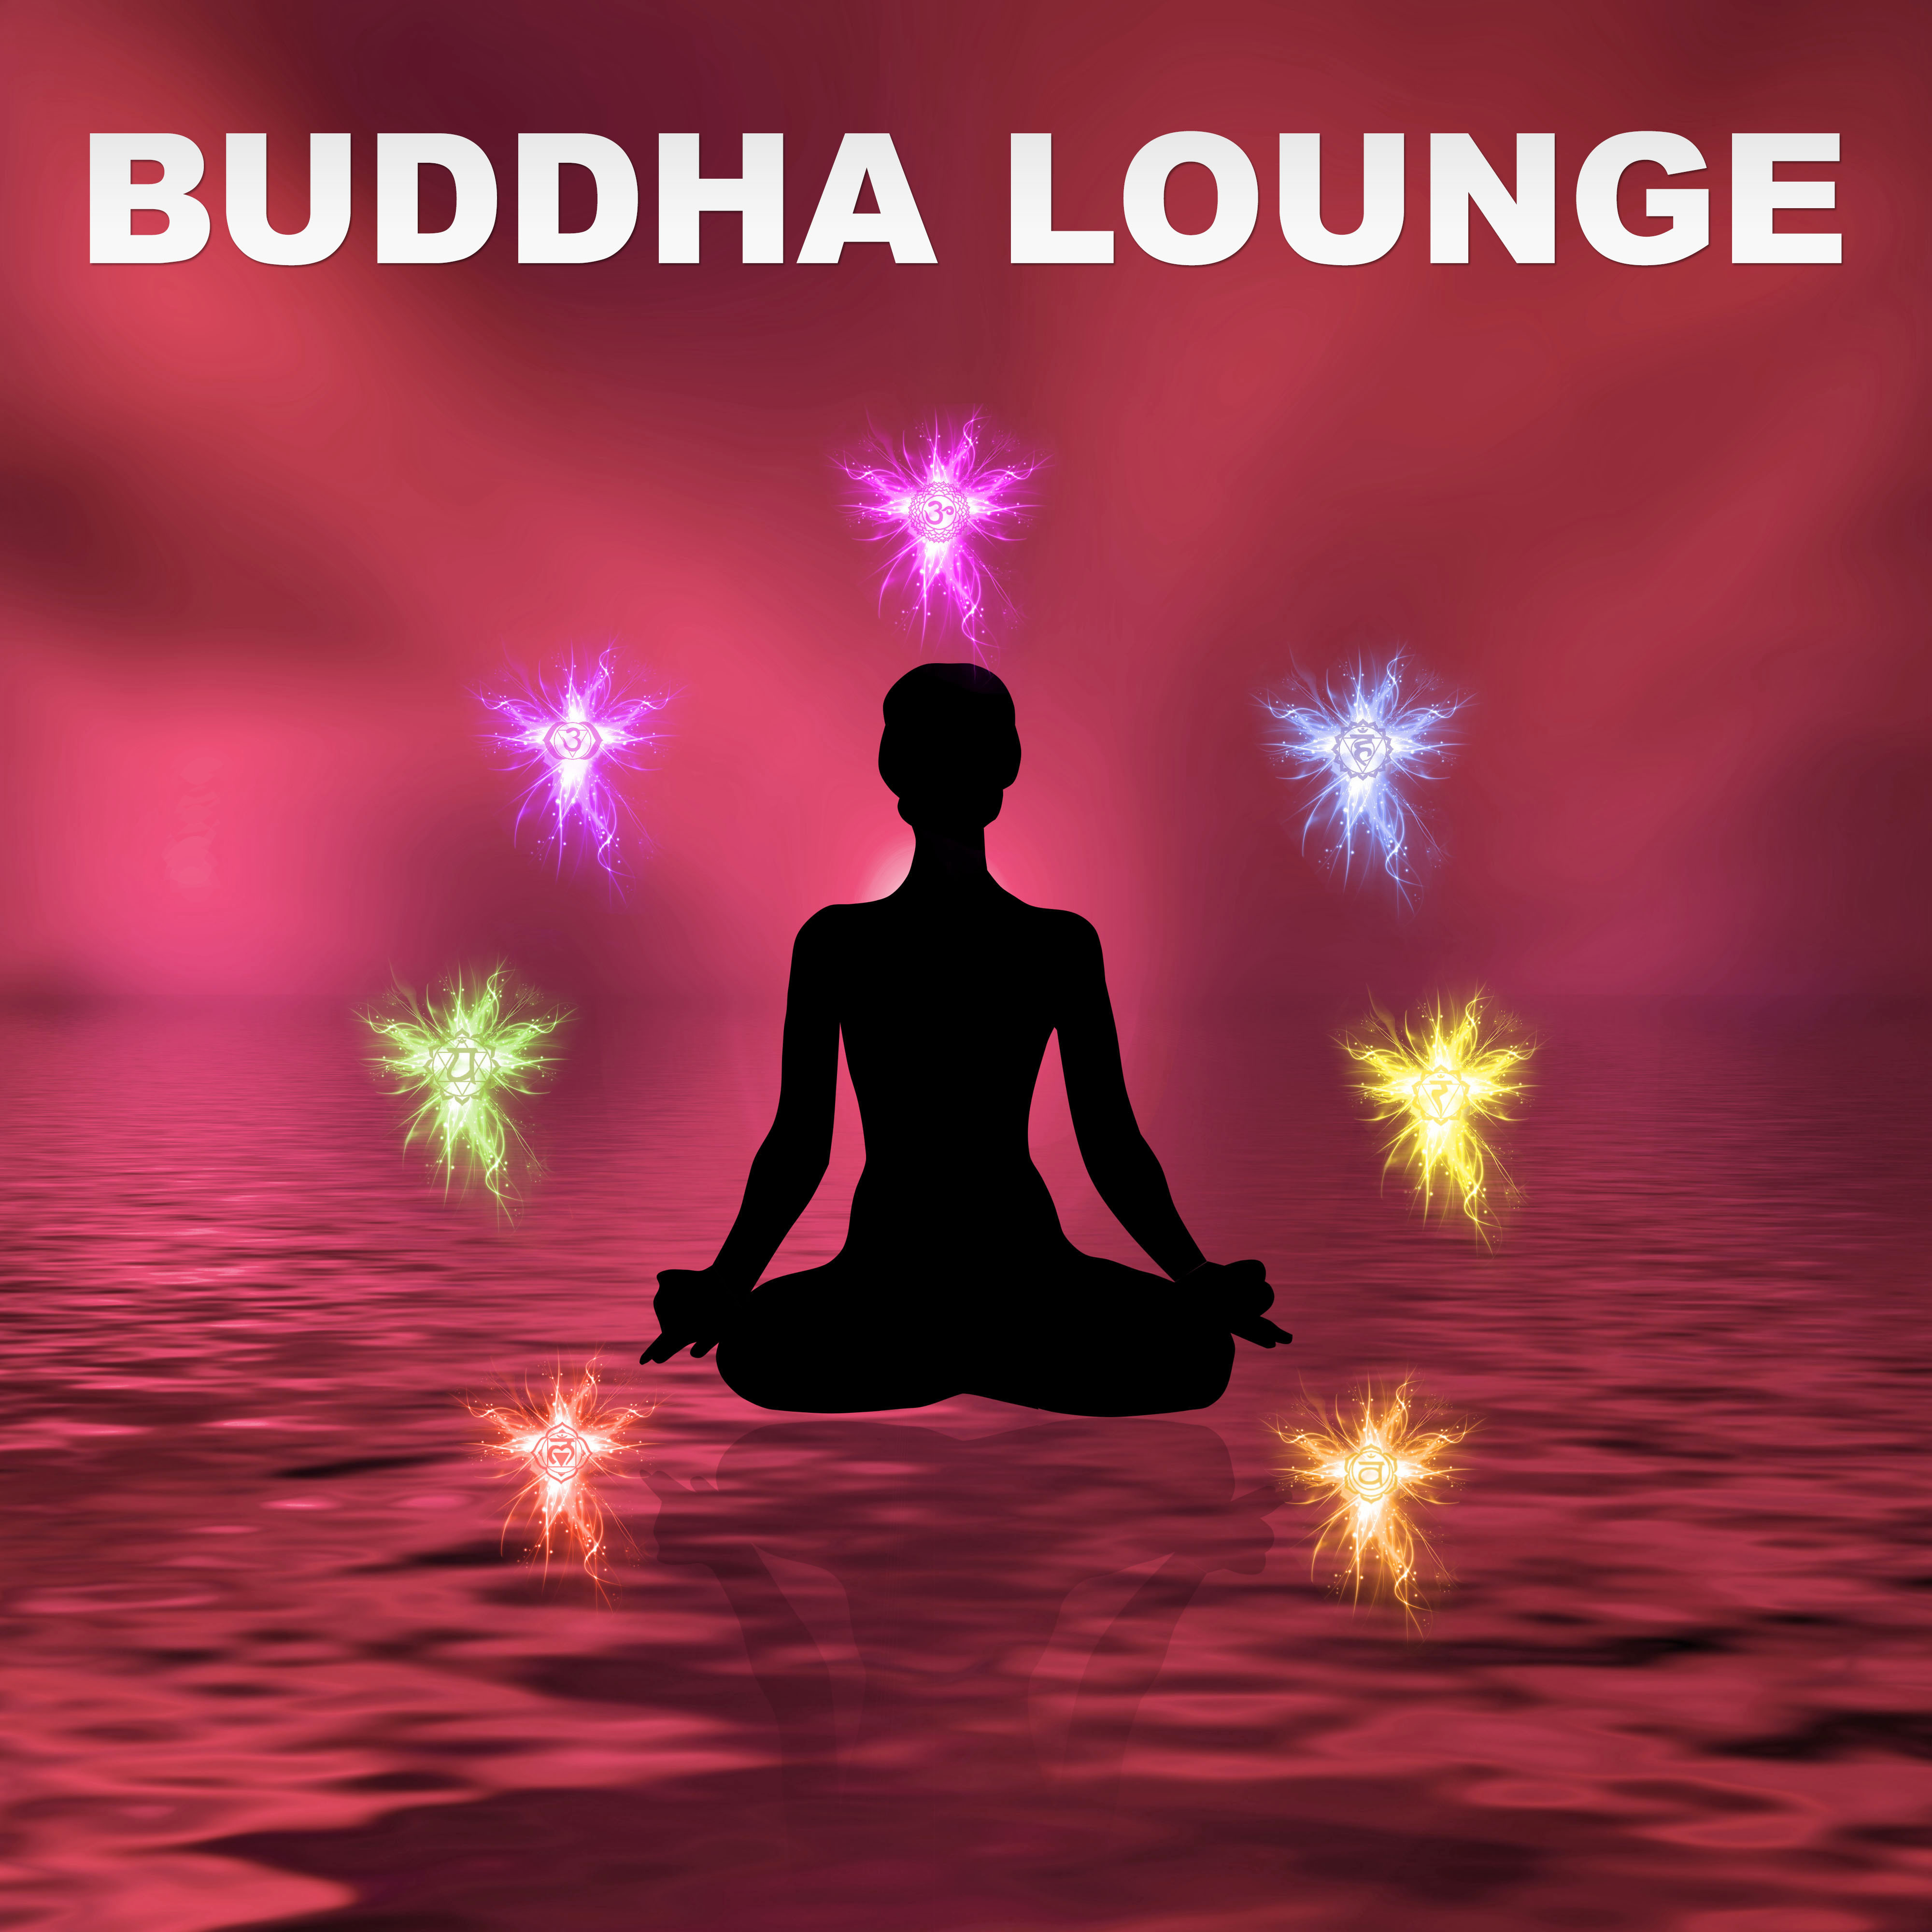 Buddha Lounge  Meditation, Inner Balance, Harmony, Yoga, Zen, Oasis Relaxation, Well Being